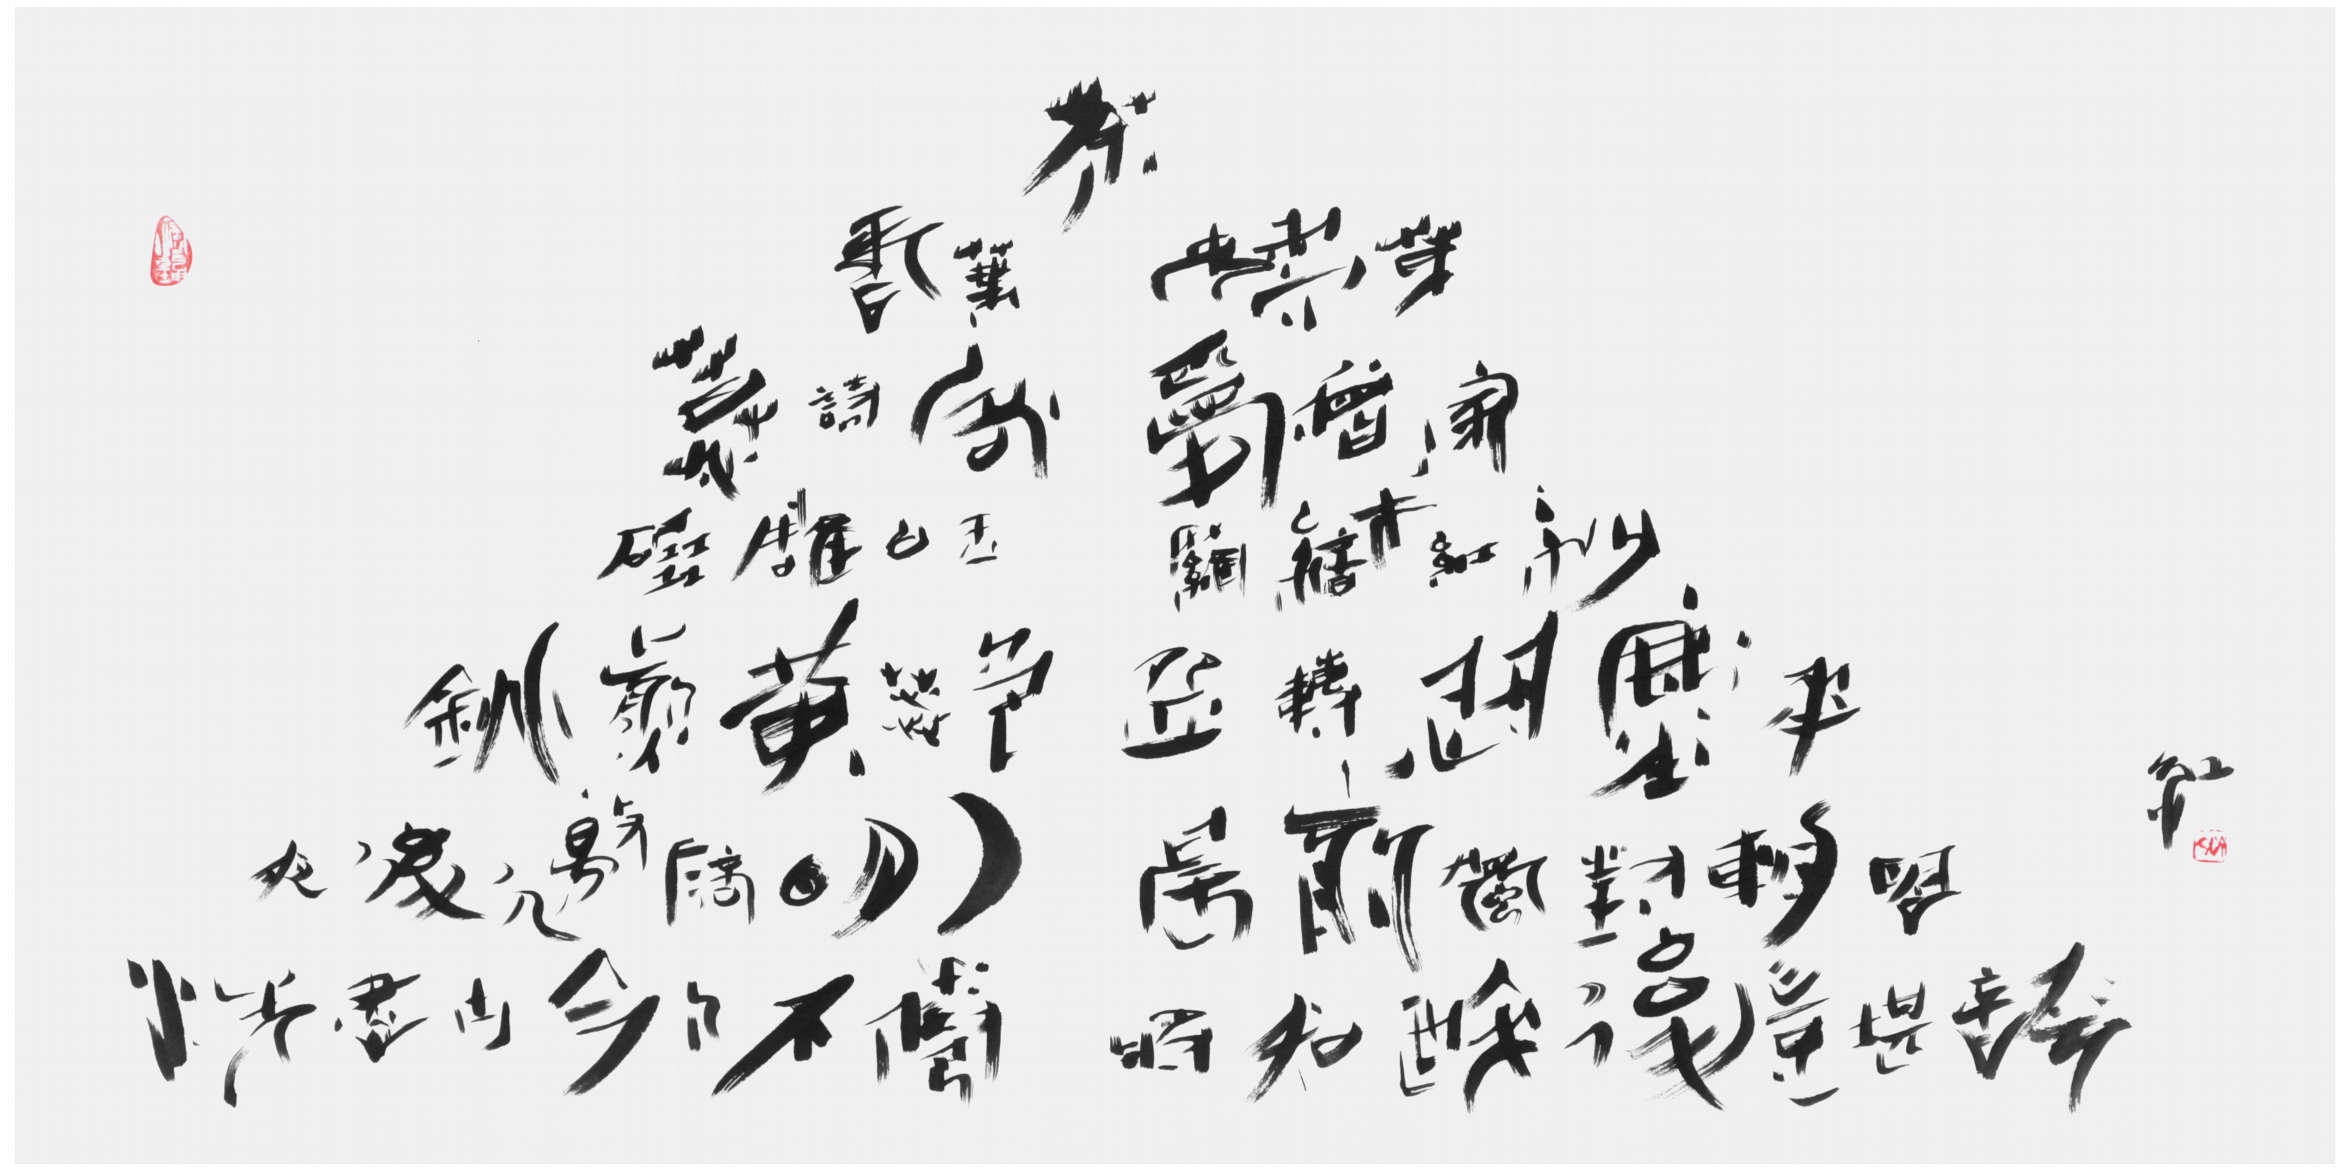 Sai Koh (Qi Hong)’s freehand brushwork Chinese calligraphy (semi-seal script): A Tea Pagoda Poem, 138×69cm, ink on Mian Liao Mian Lian Xuan paper